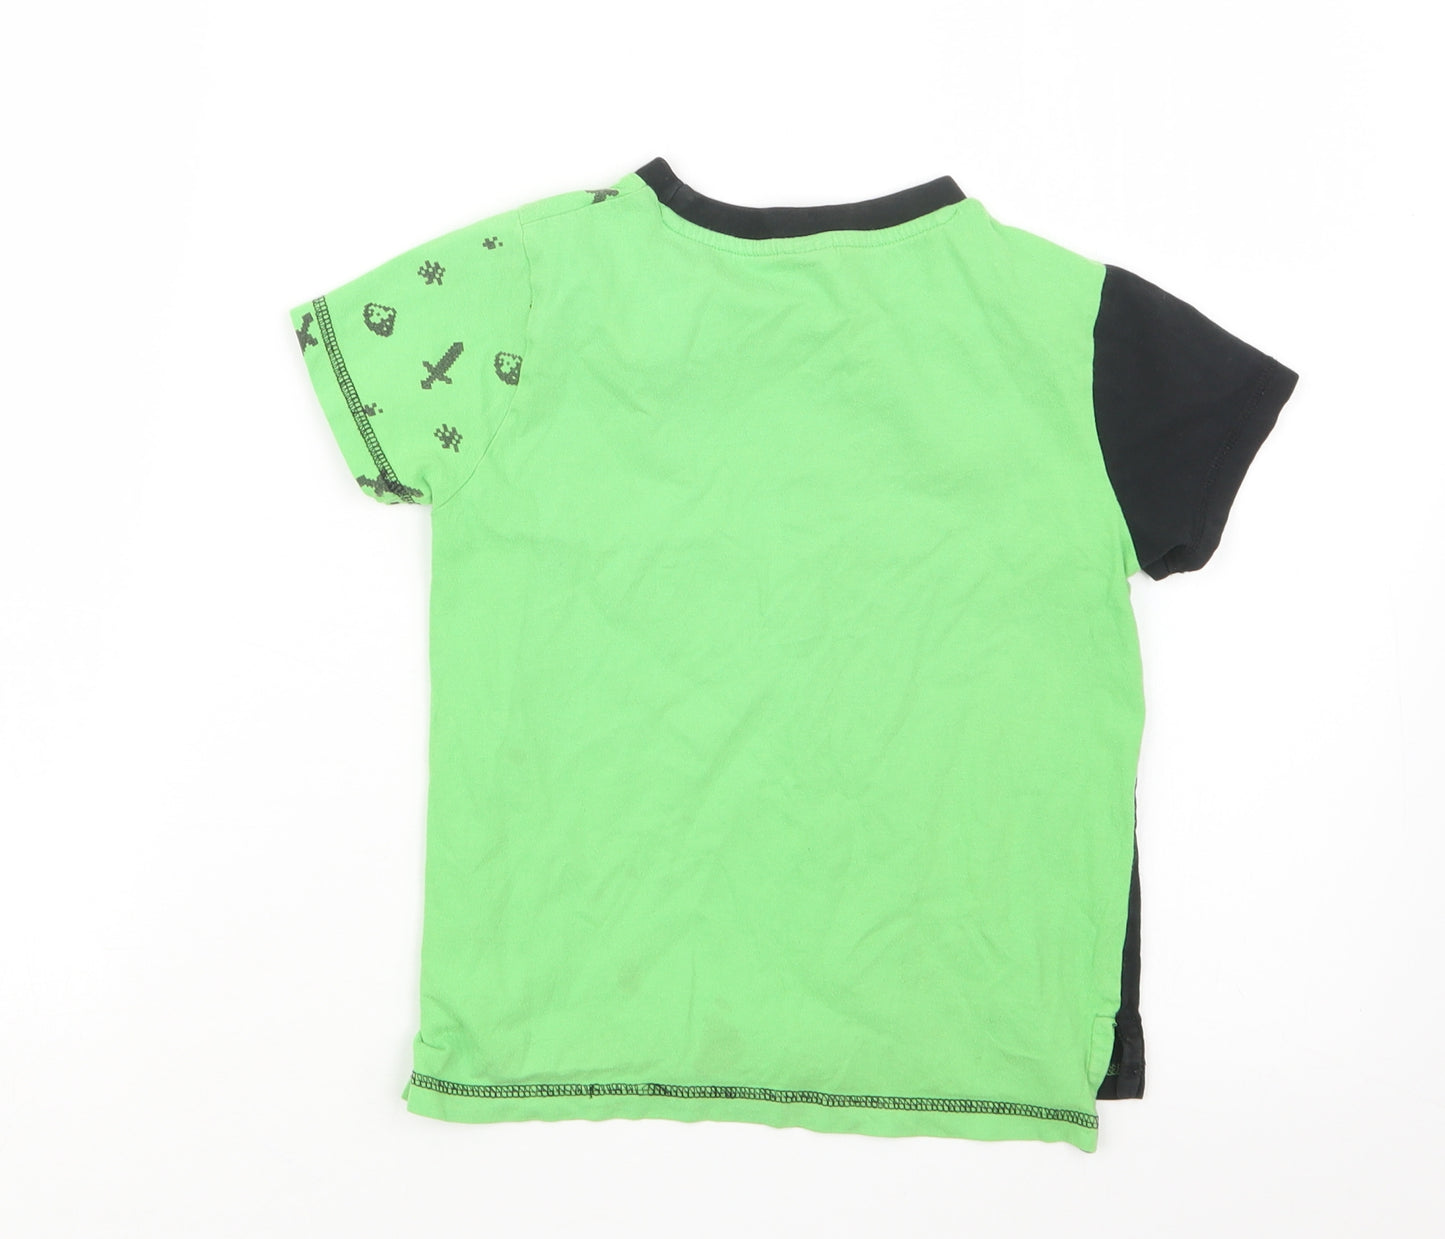 Jinx Boys Green   Basic T-Shirt Size 4-5 Years  - Minecraft